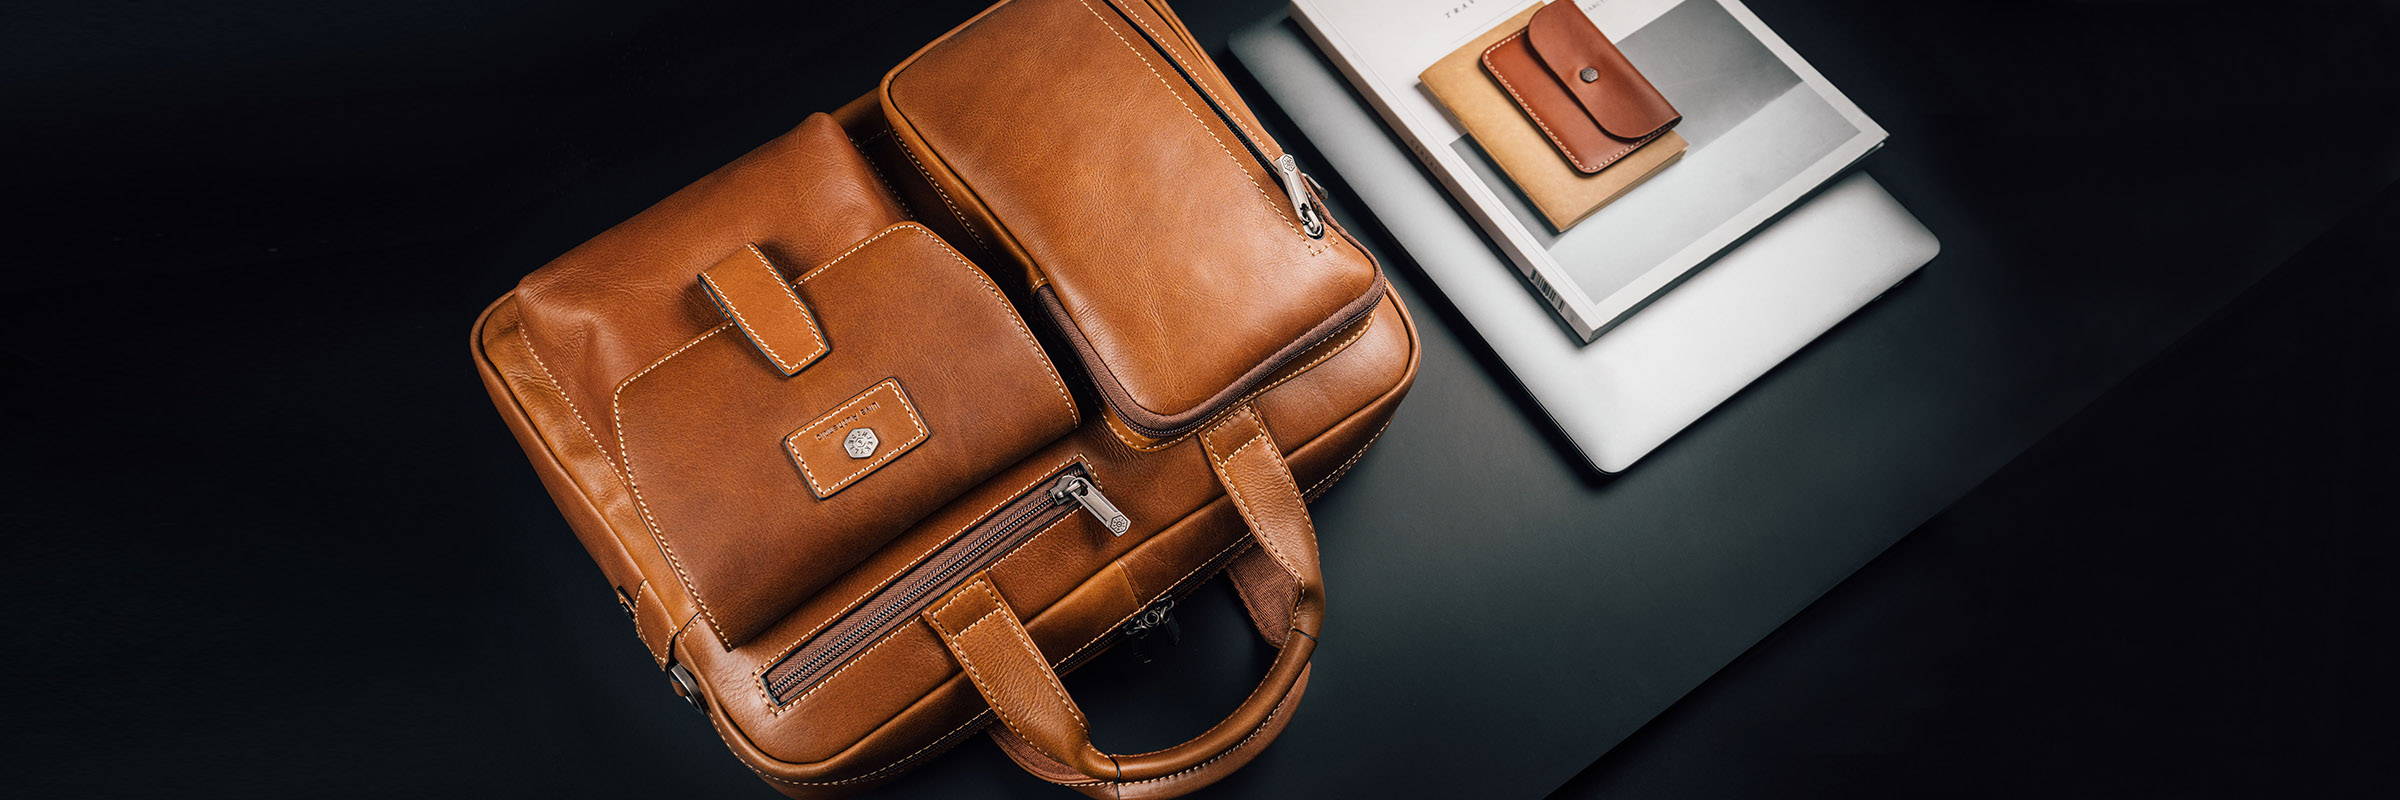 Men's leather briefcase - brown